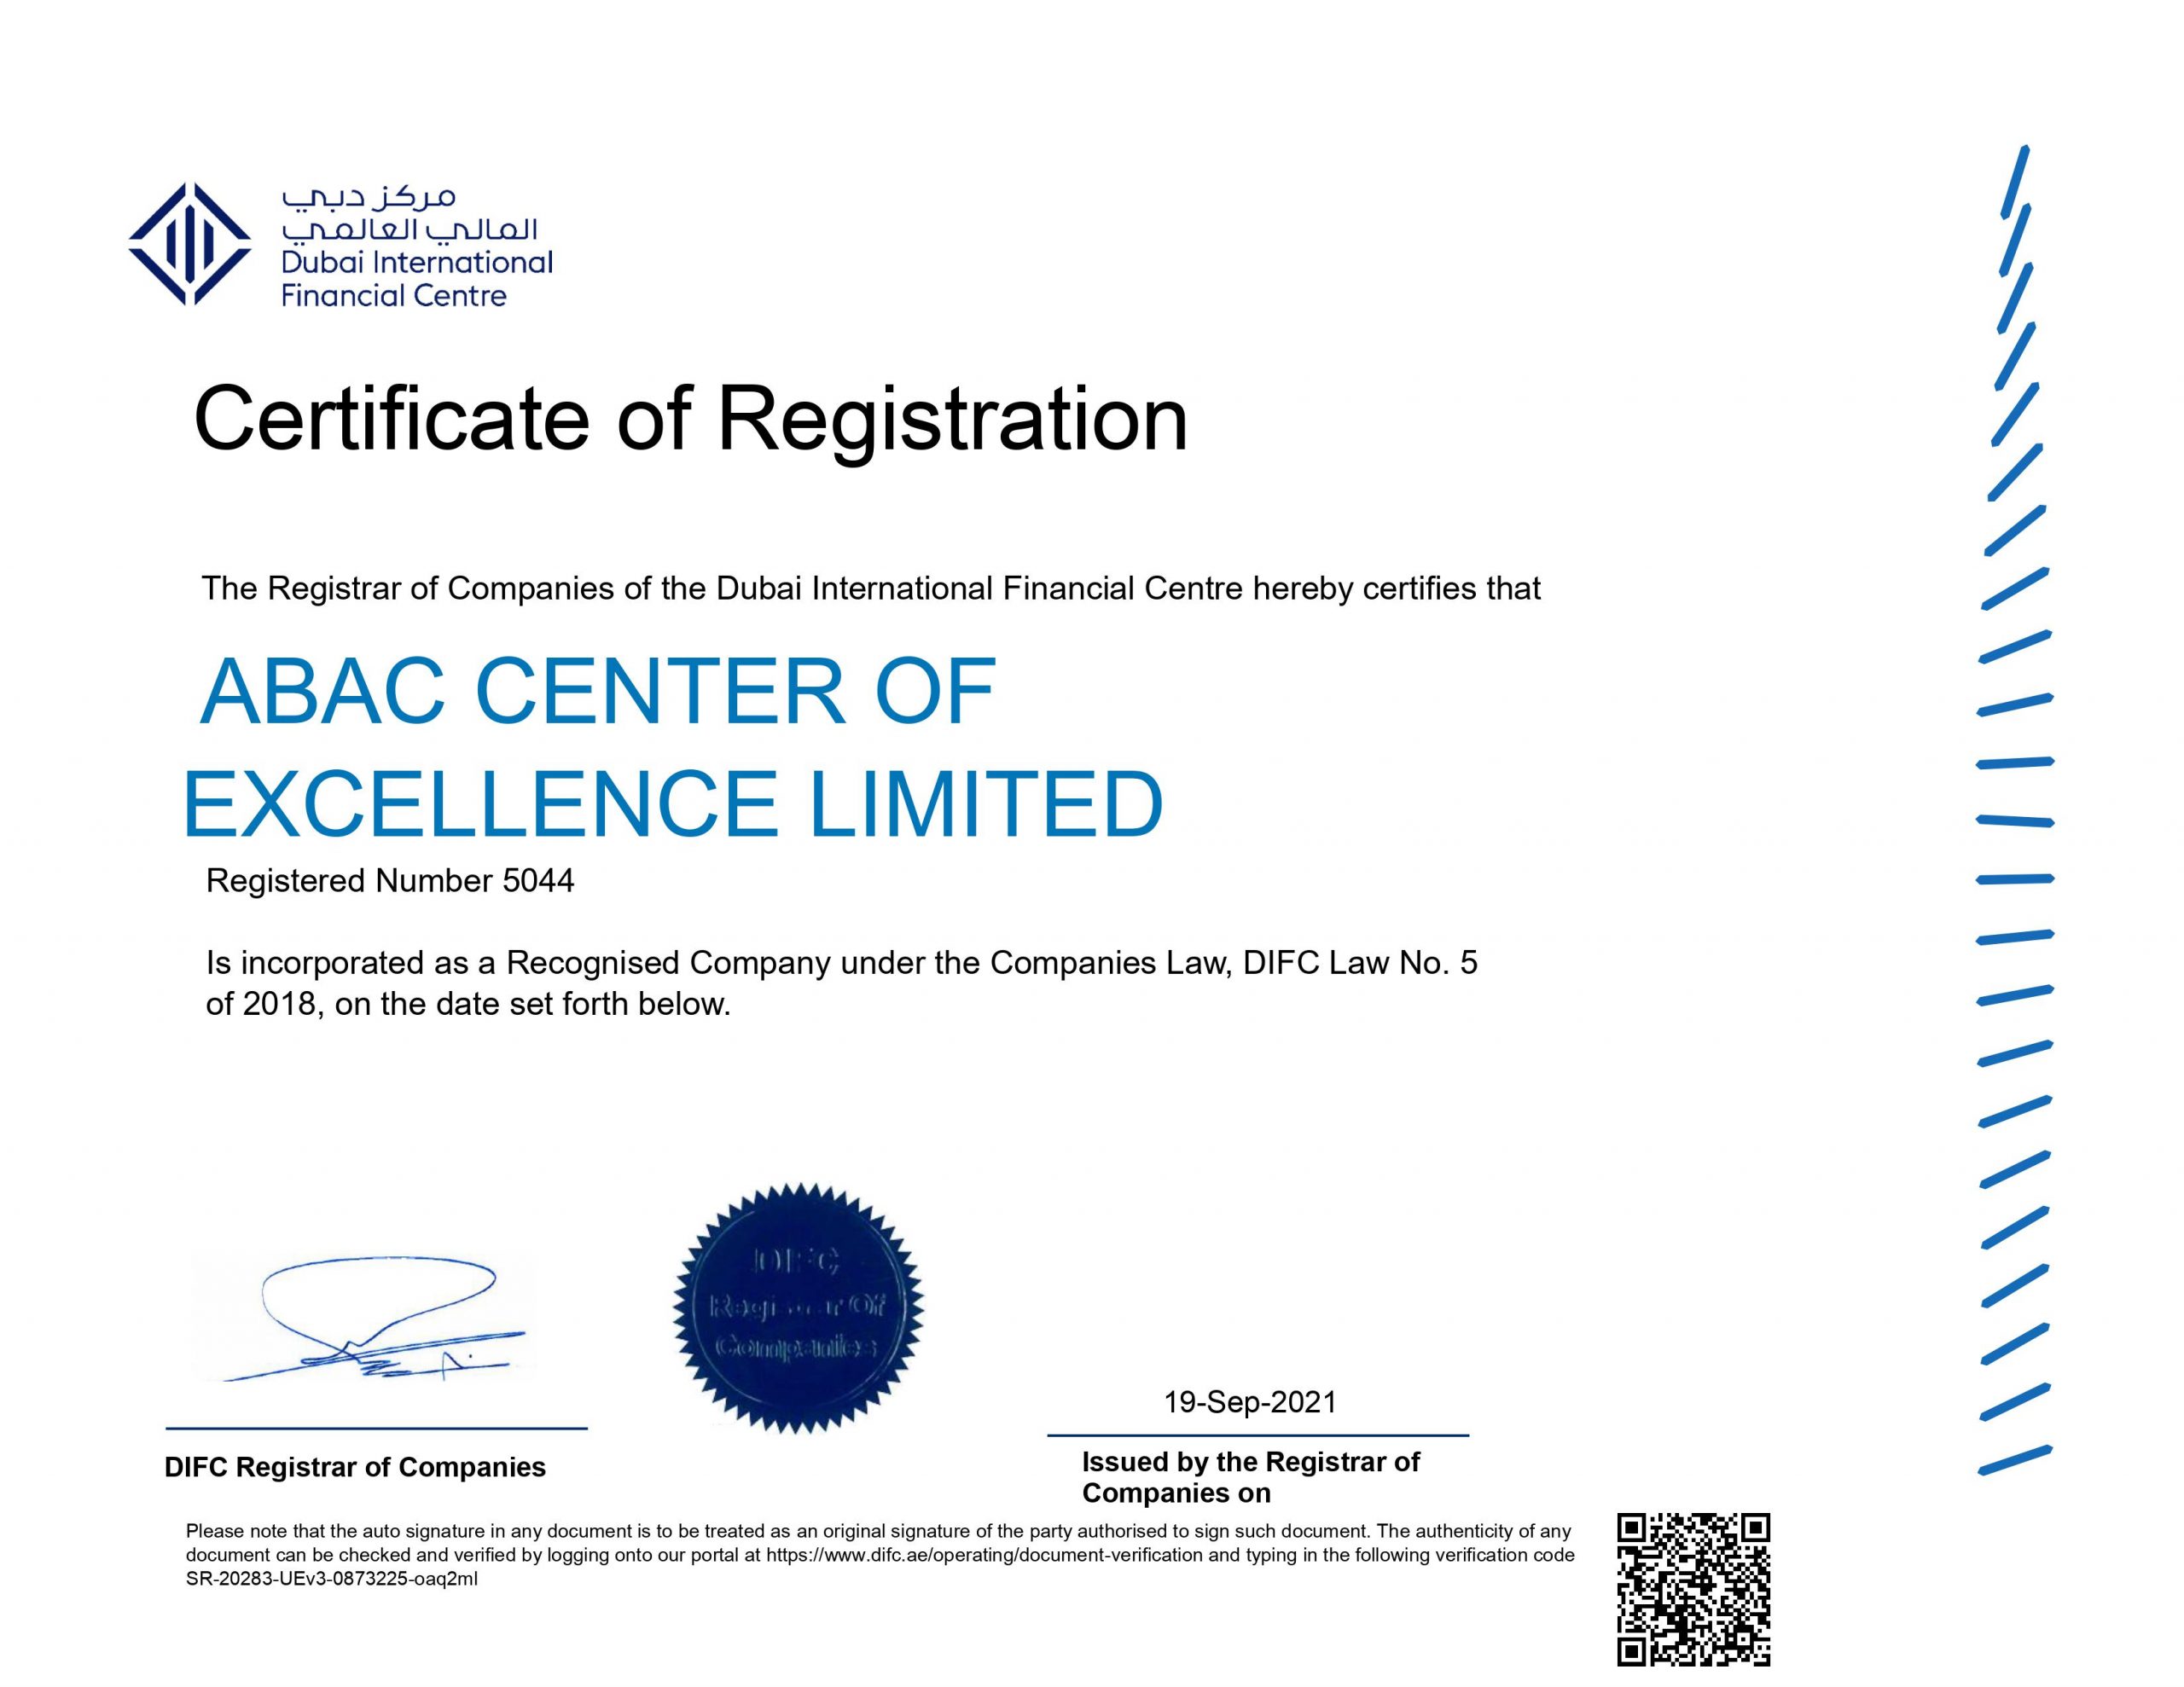 ABAC - registered member of DIFC